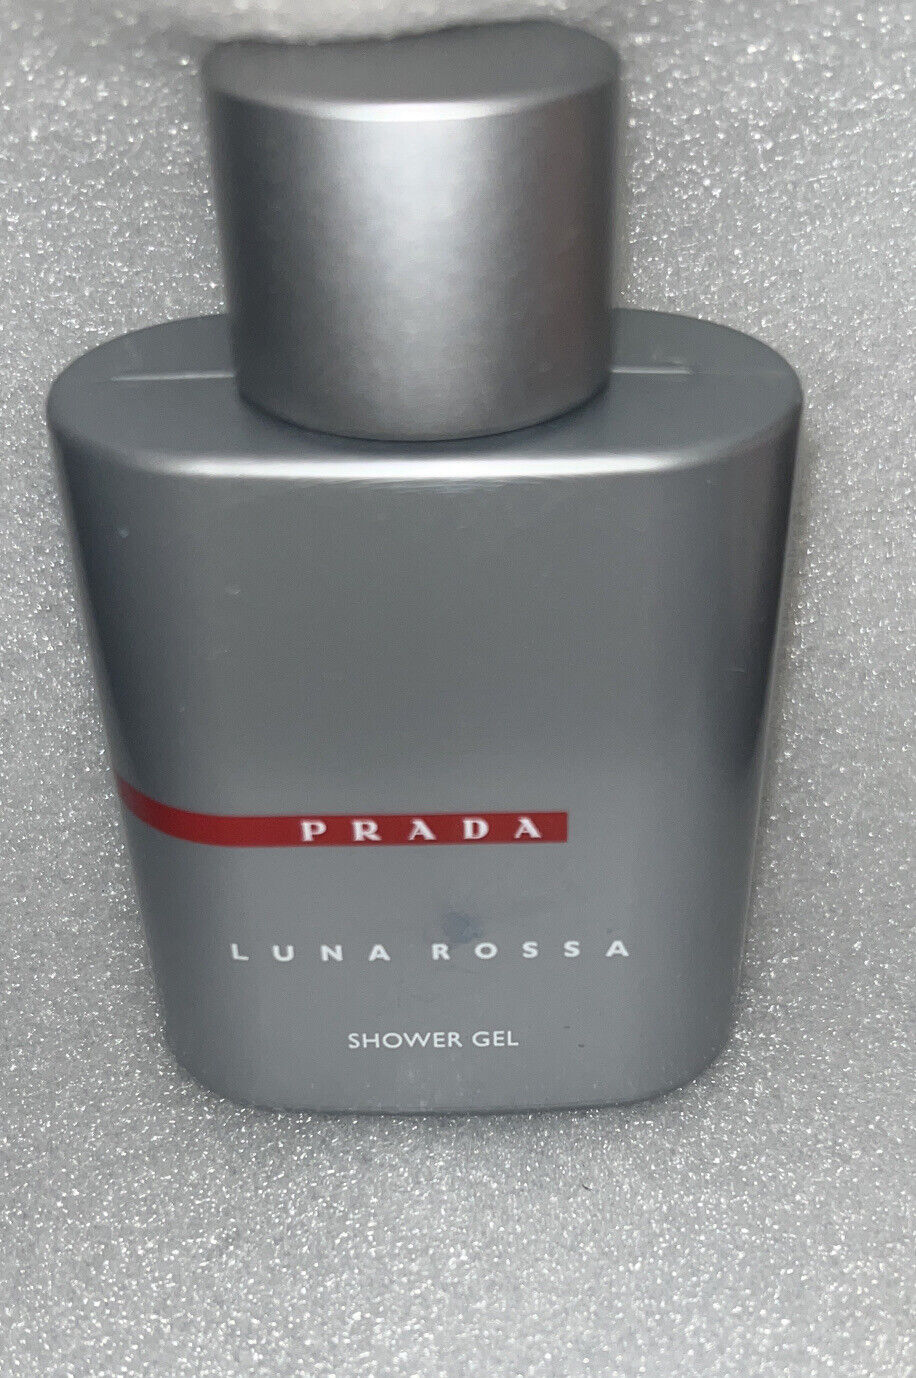 Luna Rossa By Prada For Men Shower Gel 3.4oz New